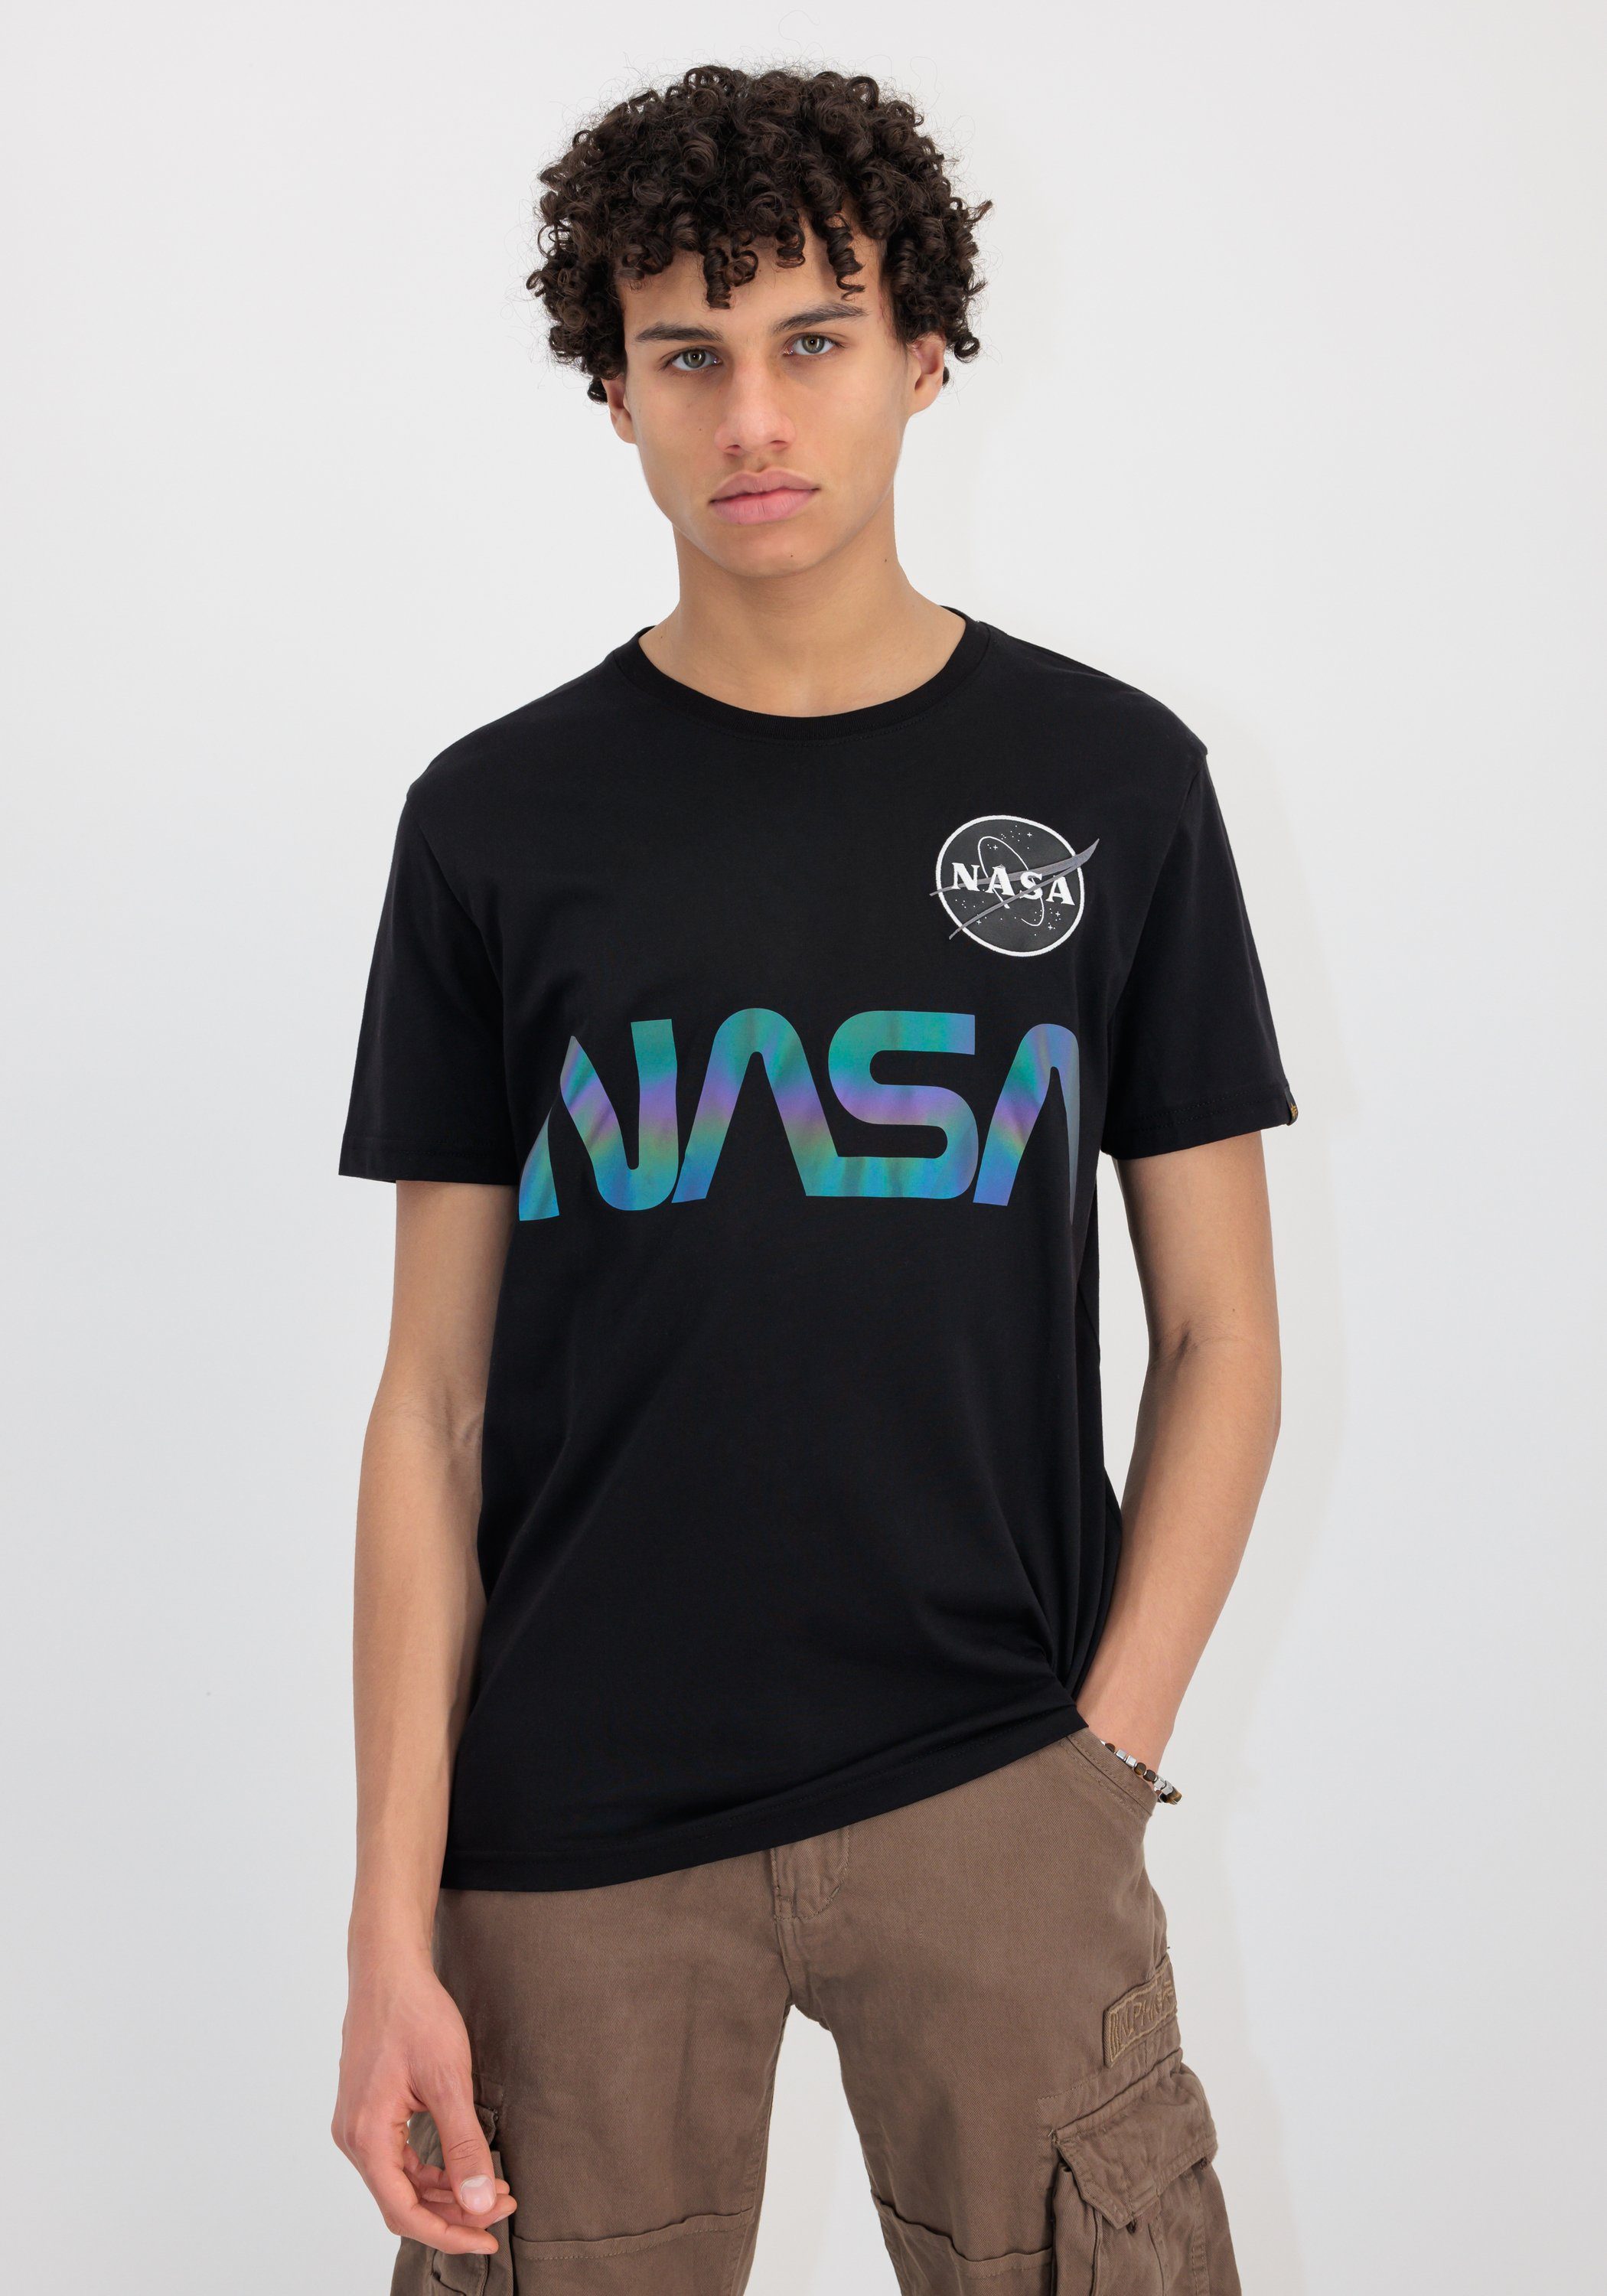 T-Shirt Men Industries T-Shirts Alpha NASA black Industries - Alpha Ref. T Rainbow